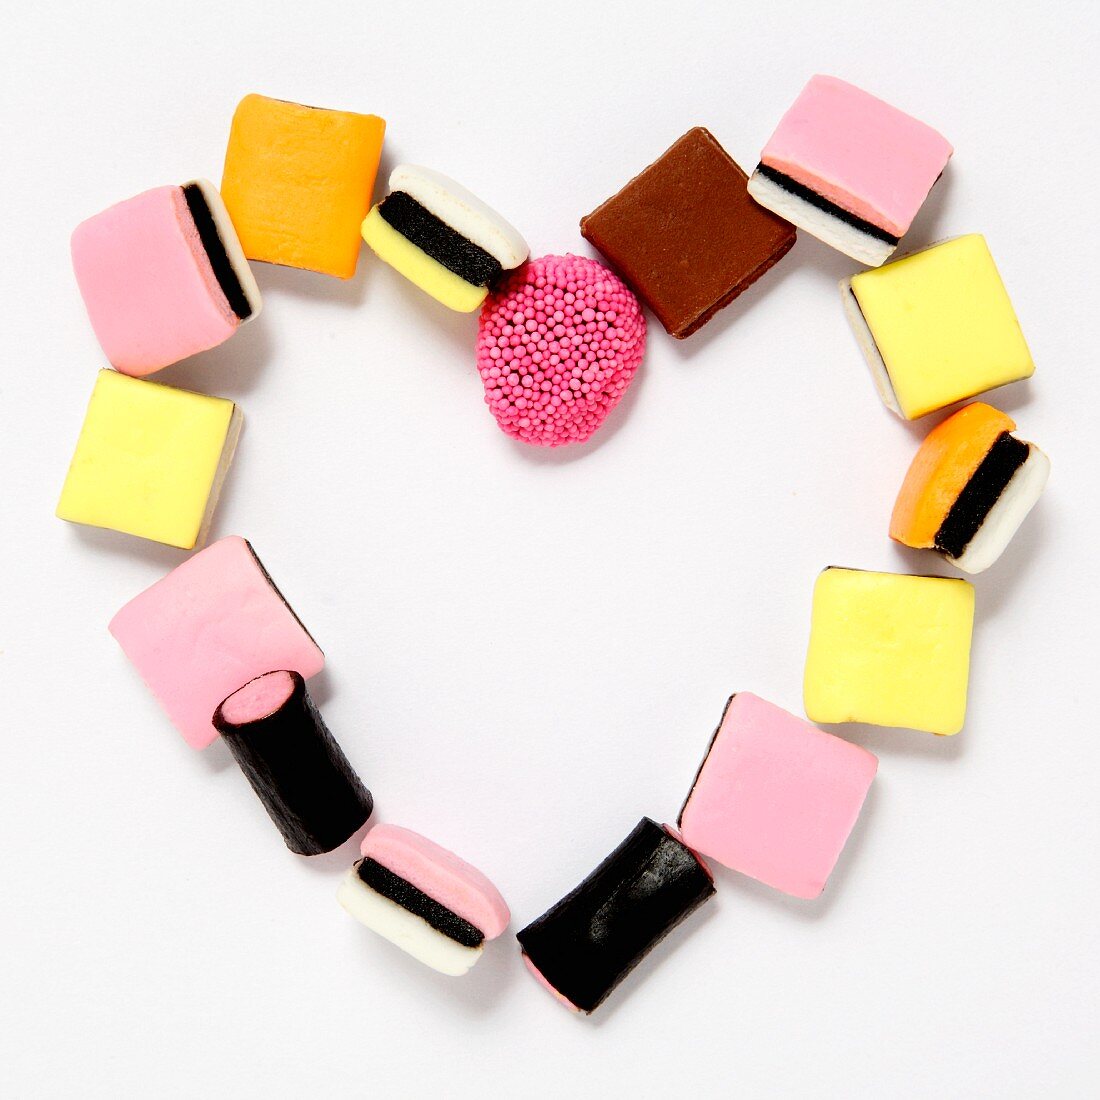 A heart shape made using liquorice sweets